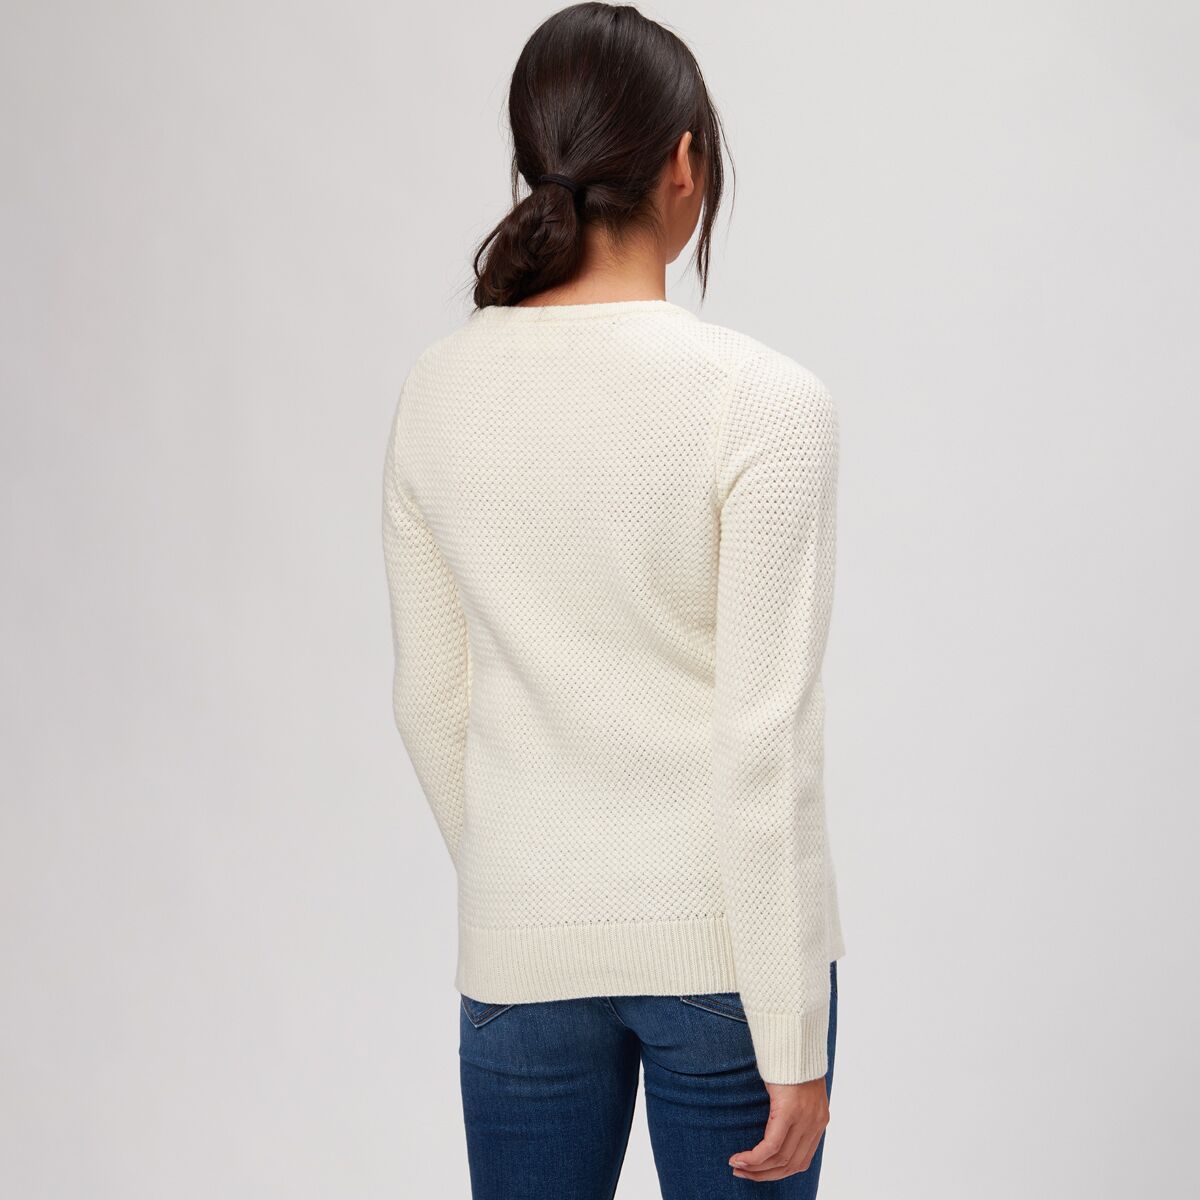 Fjallraven Ovik Structure Sweater - Women's - Women